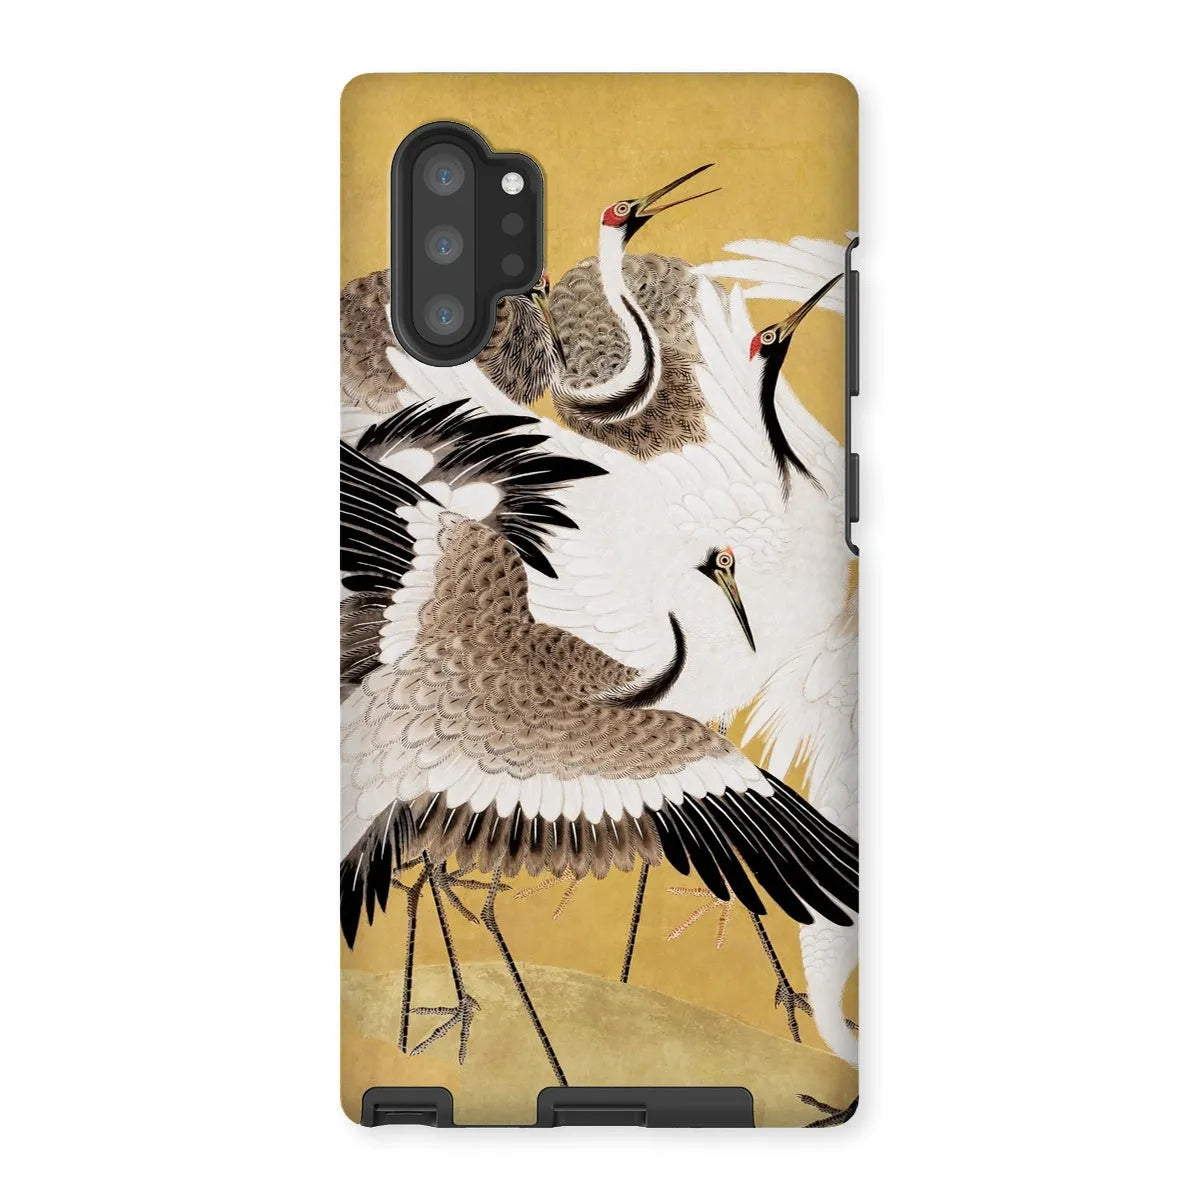 Flock Of Cranes Japanese Bird Art Phone Case - Ishida Yūtei - Samsung Galaxy Note 10p / Matte - Mobile Phone Cases